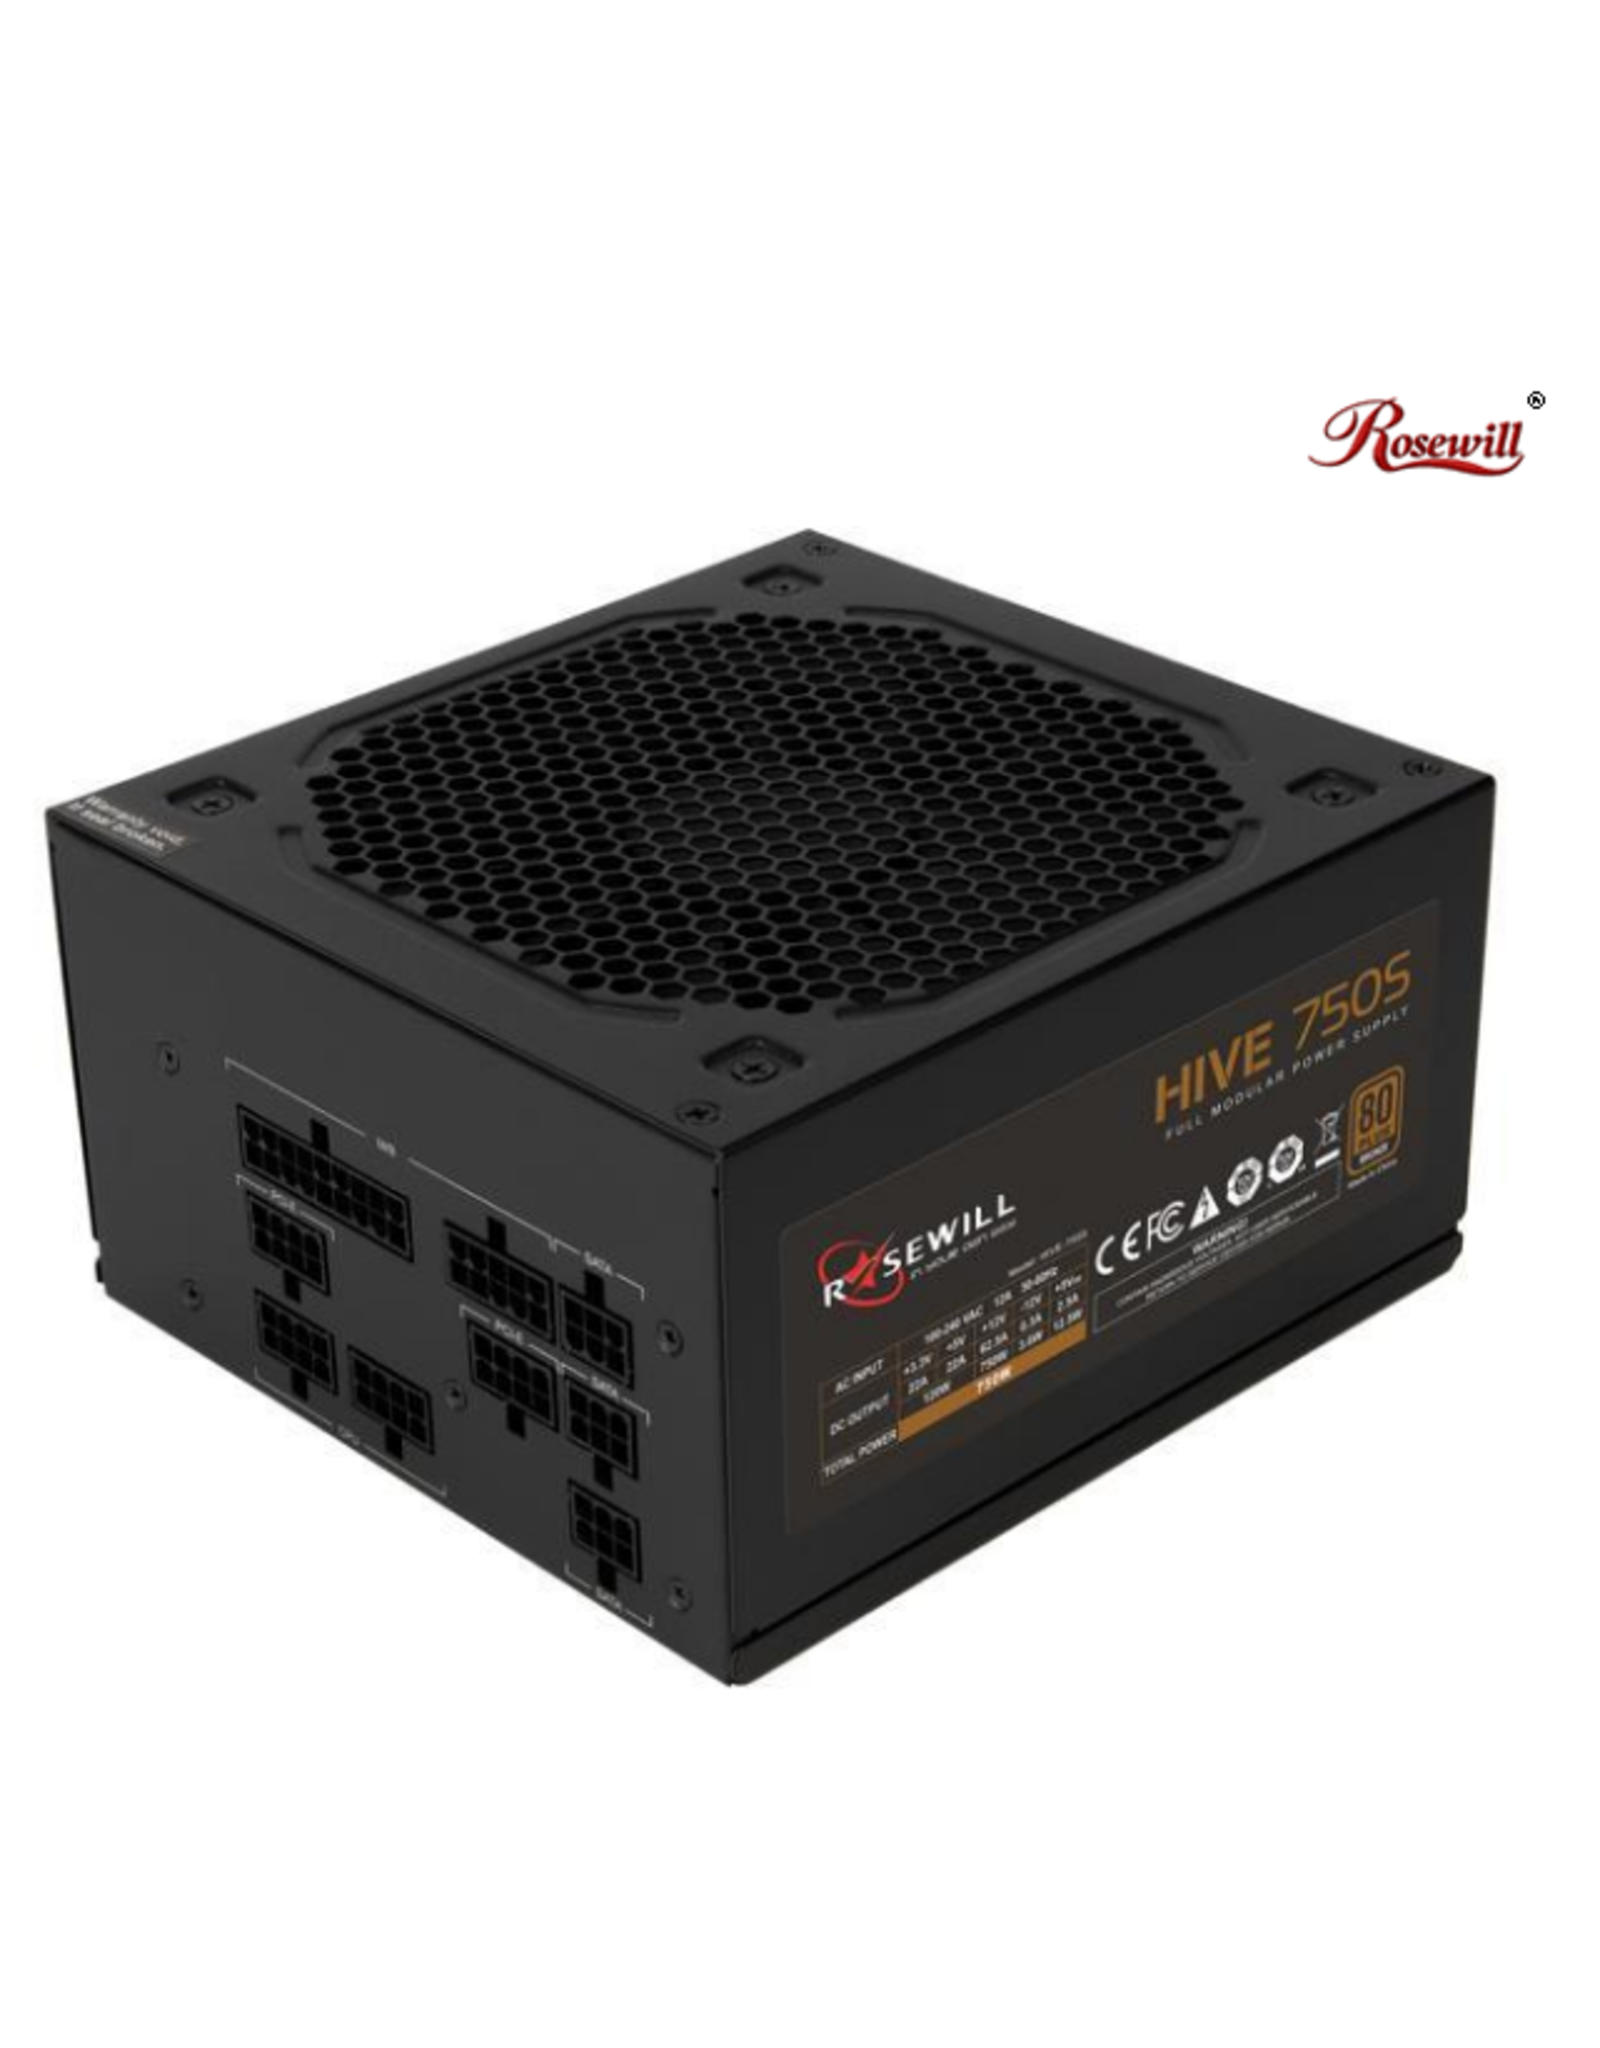 Rosewill Hive Series 750W Modular Gaming Power Supply, 80 PLUS Bronze Certified, Single +12V Rail, SLI & CrossFire Ready